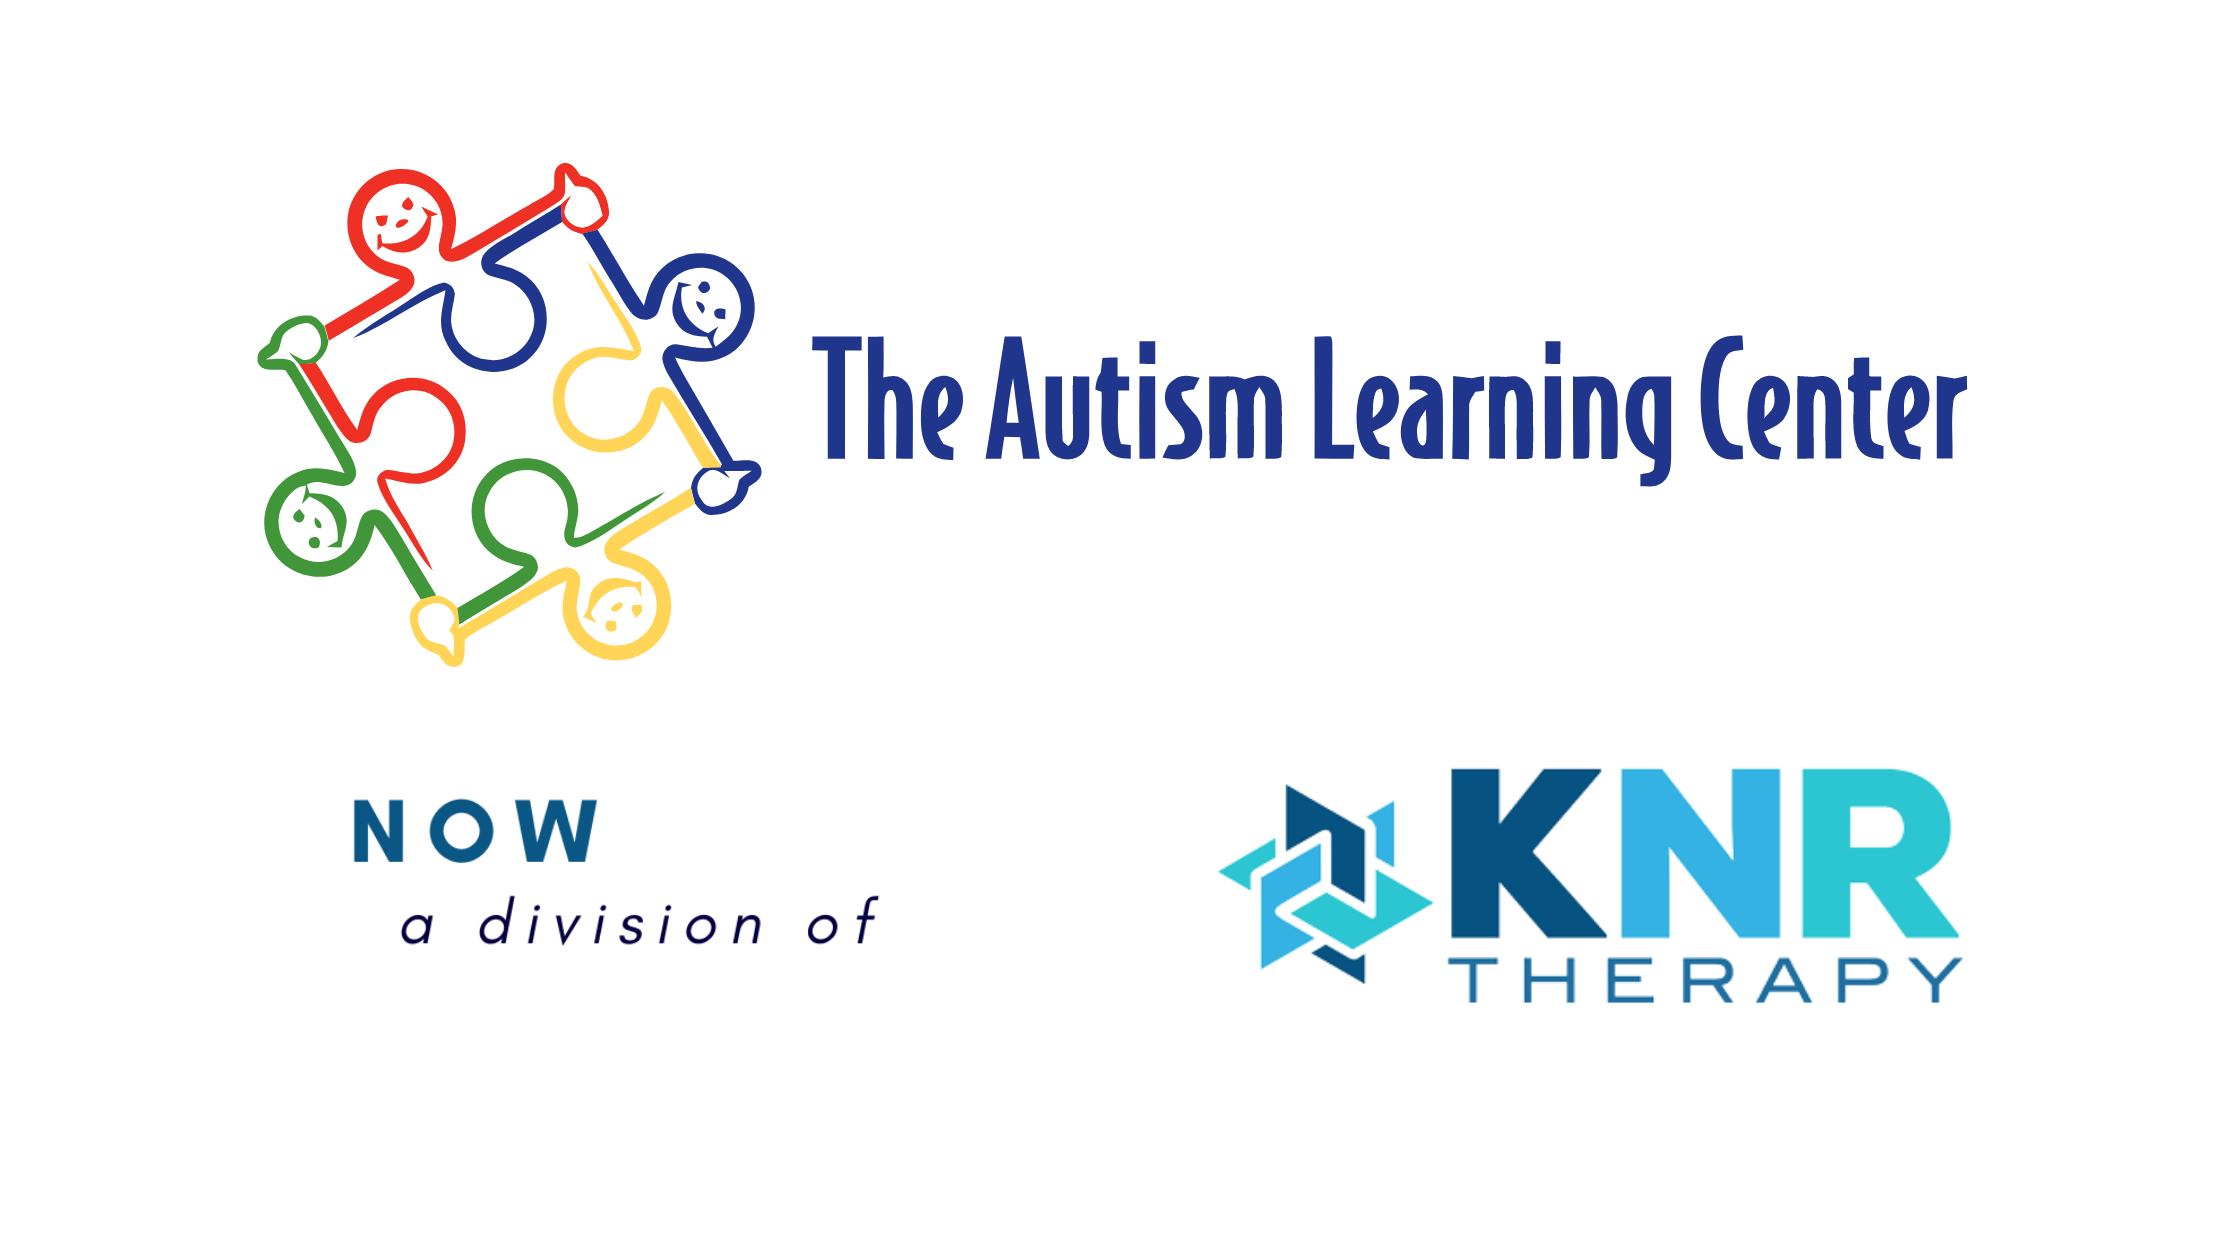 KNR Therapy_press release_autism center_columbus ga